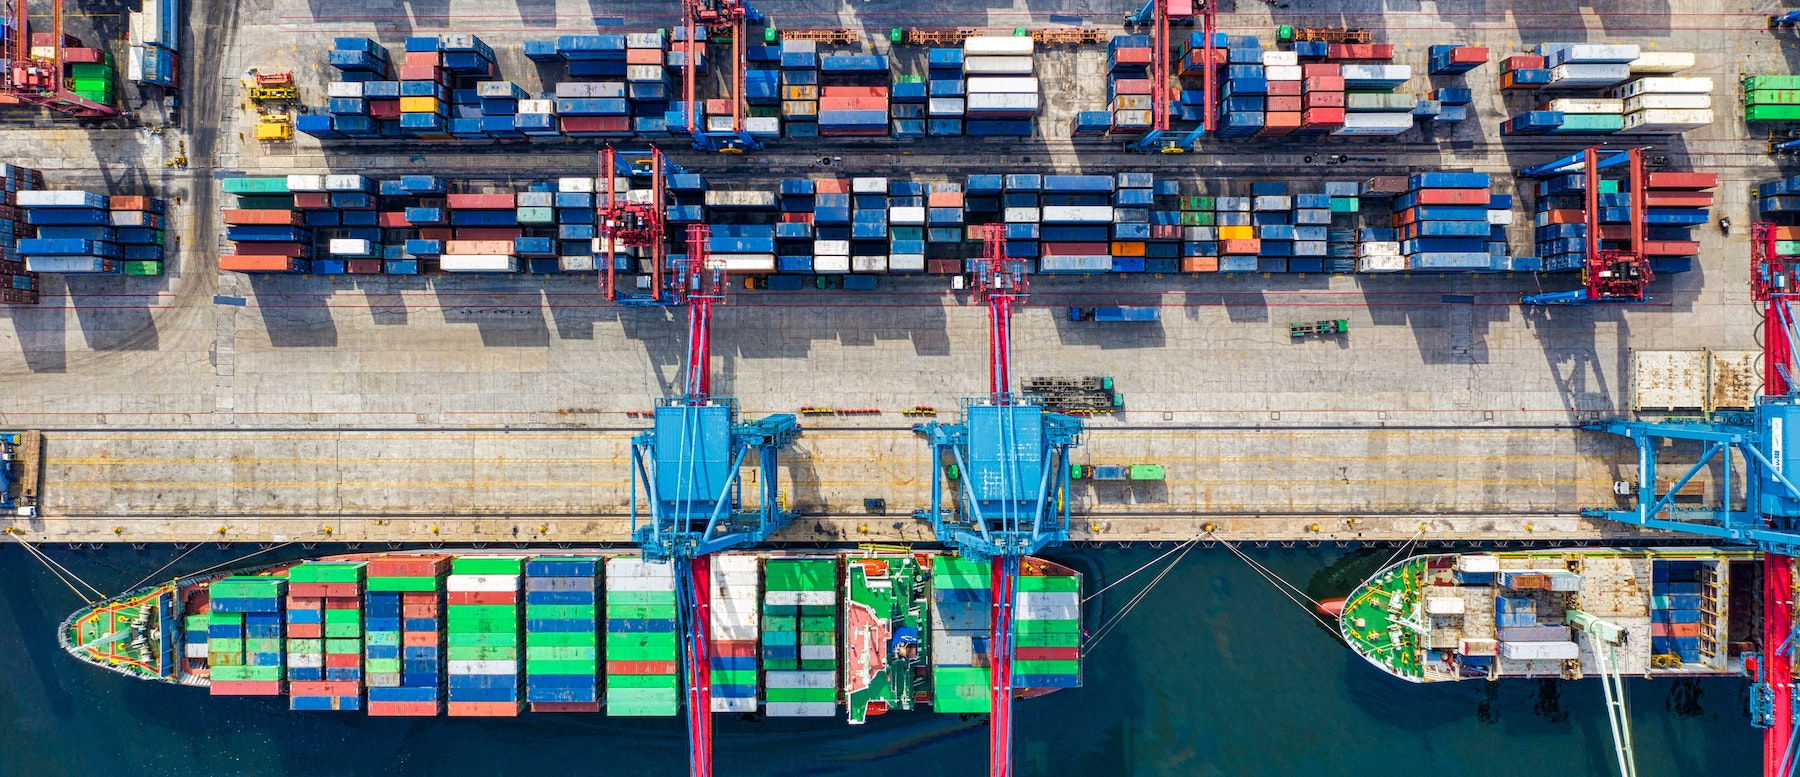 EDRAY’S 2023 Top Predictions for Collaborative Port Logistics